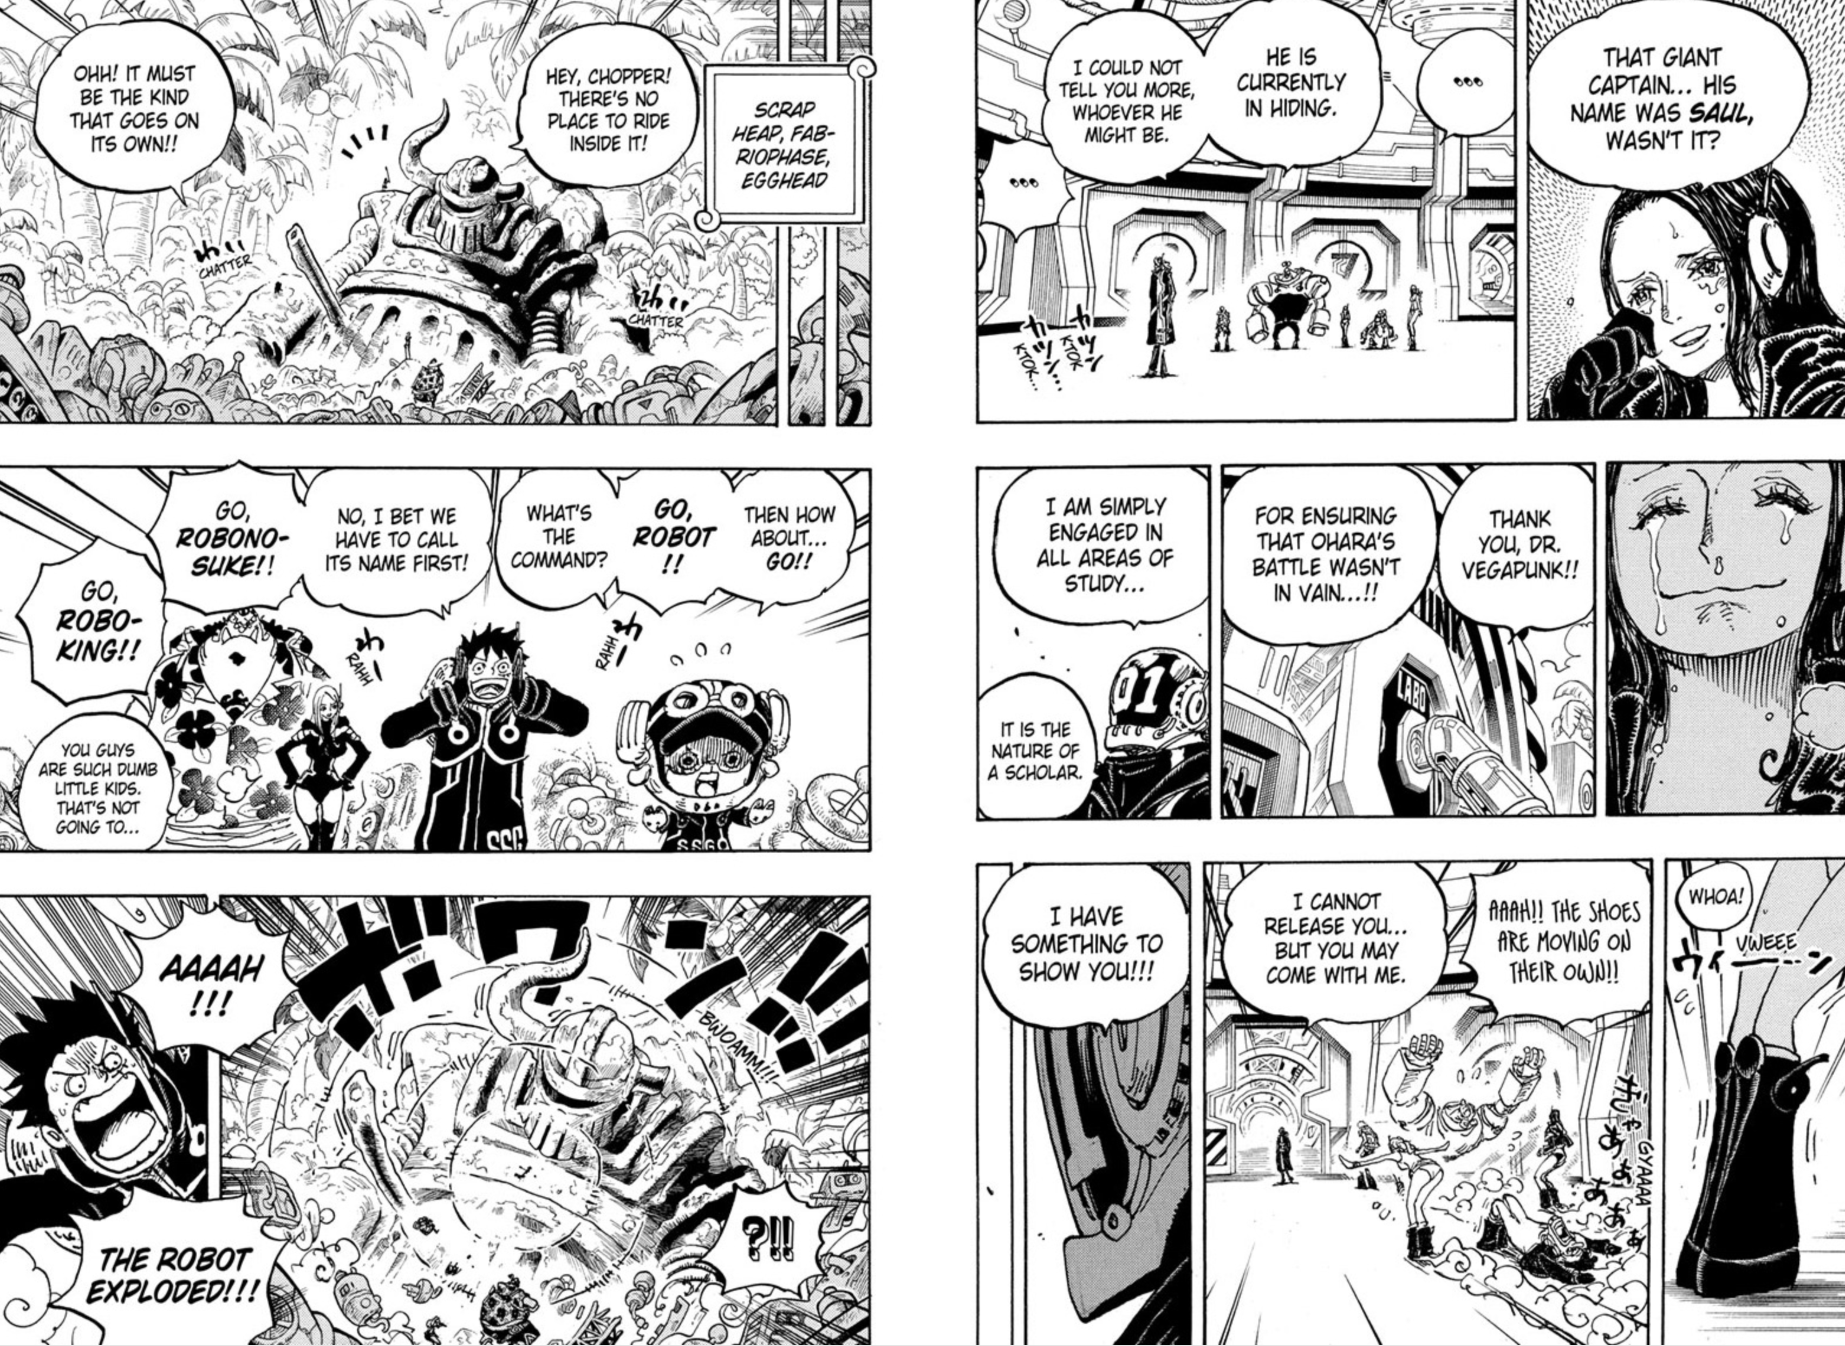 One Piece Chapitre 1066 Pages 14-15